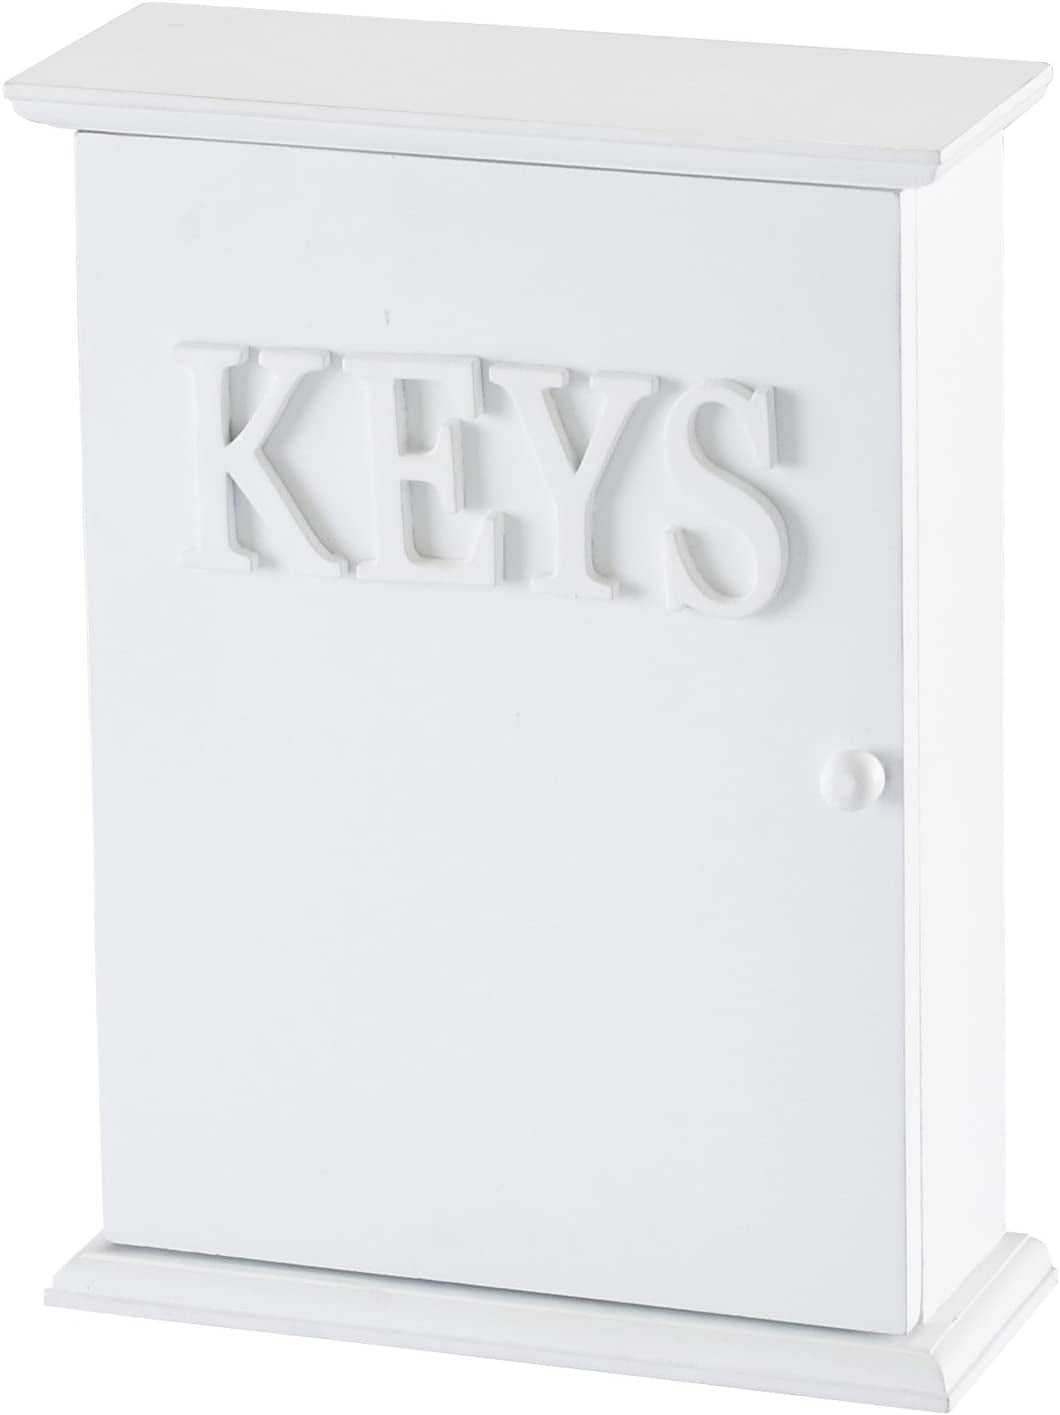 Crisp White Key Cabinet Storage